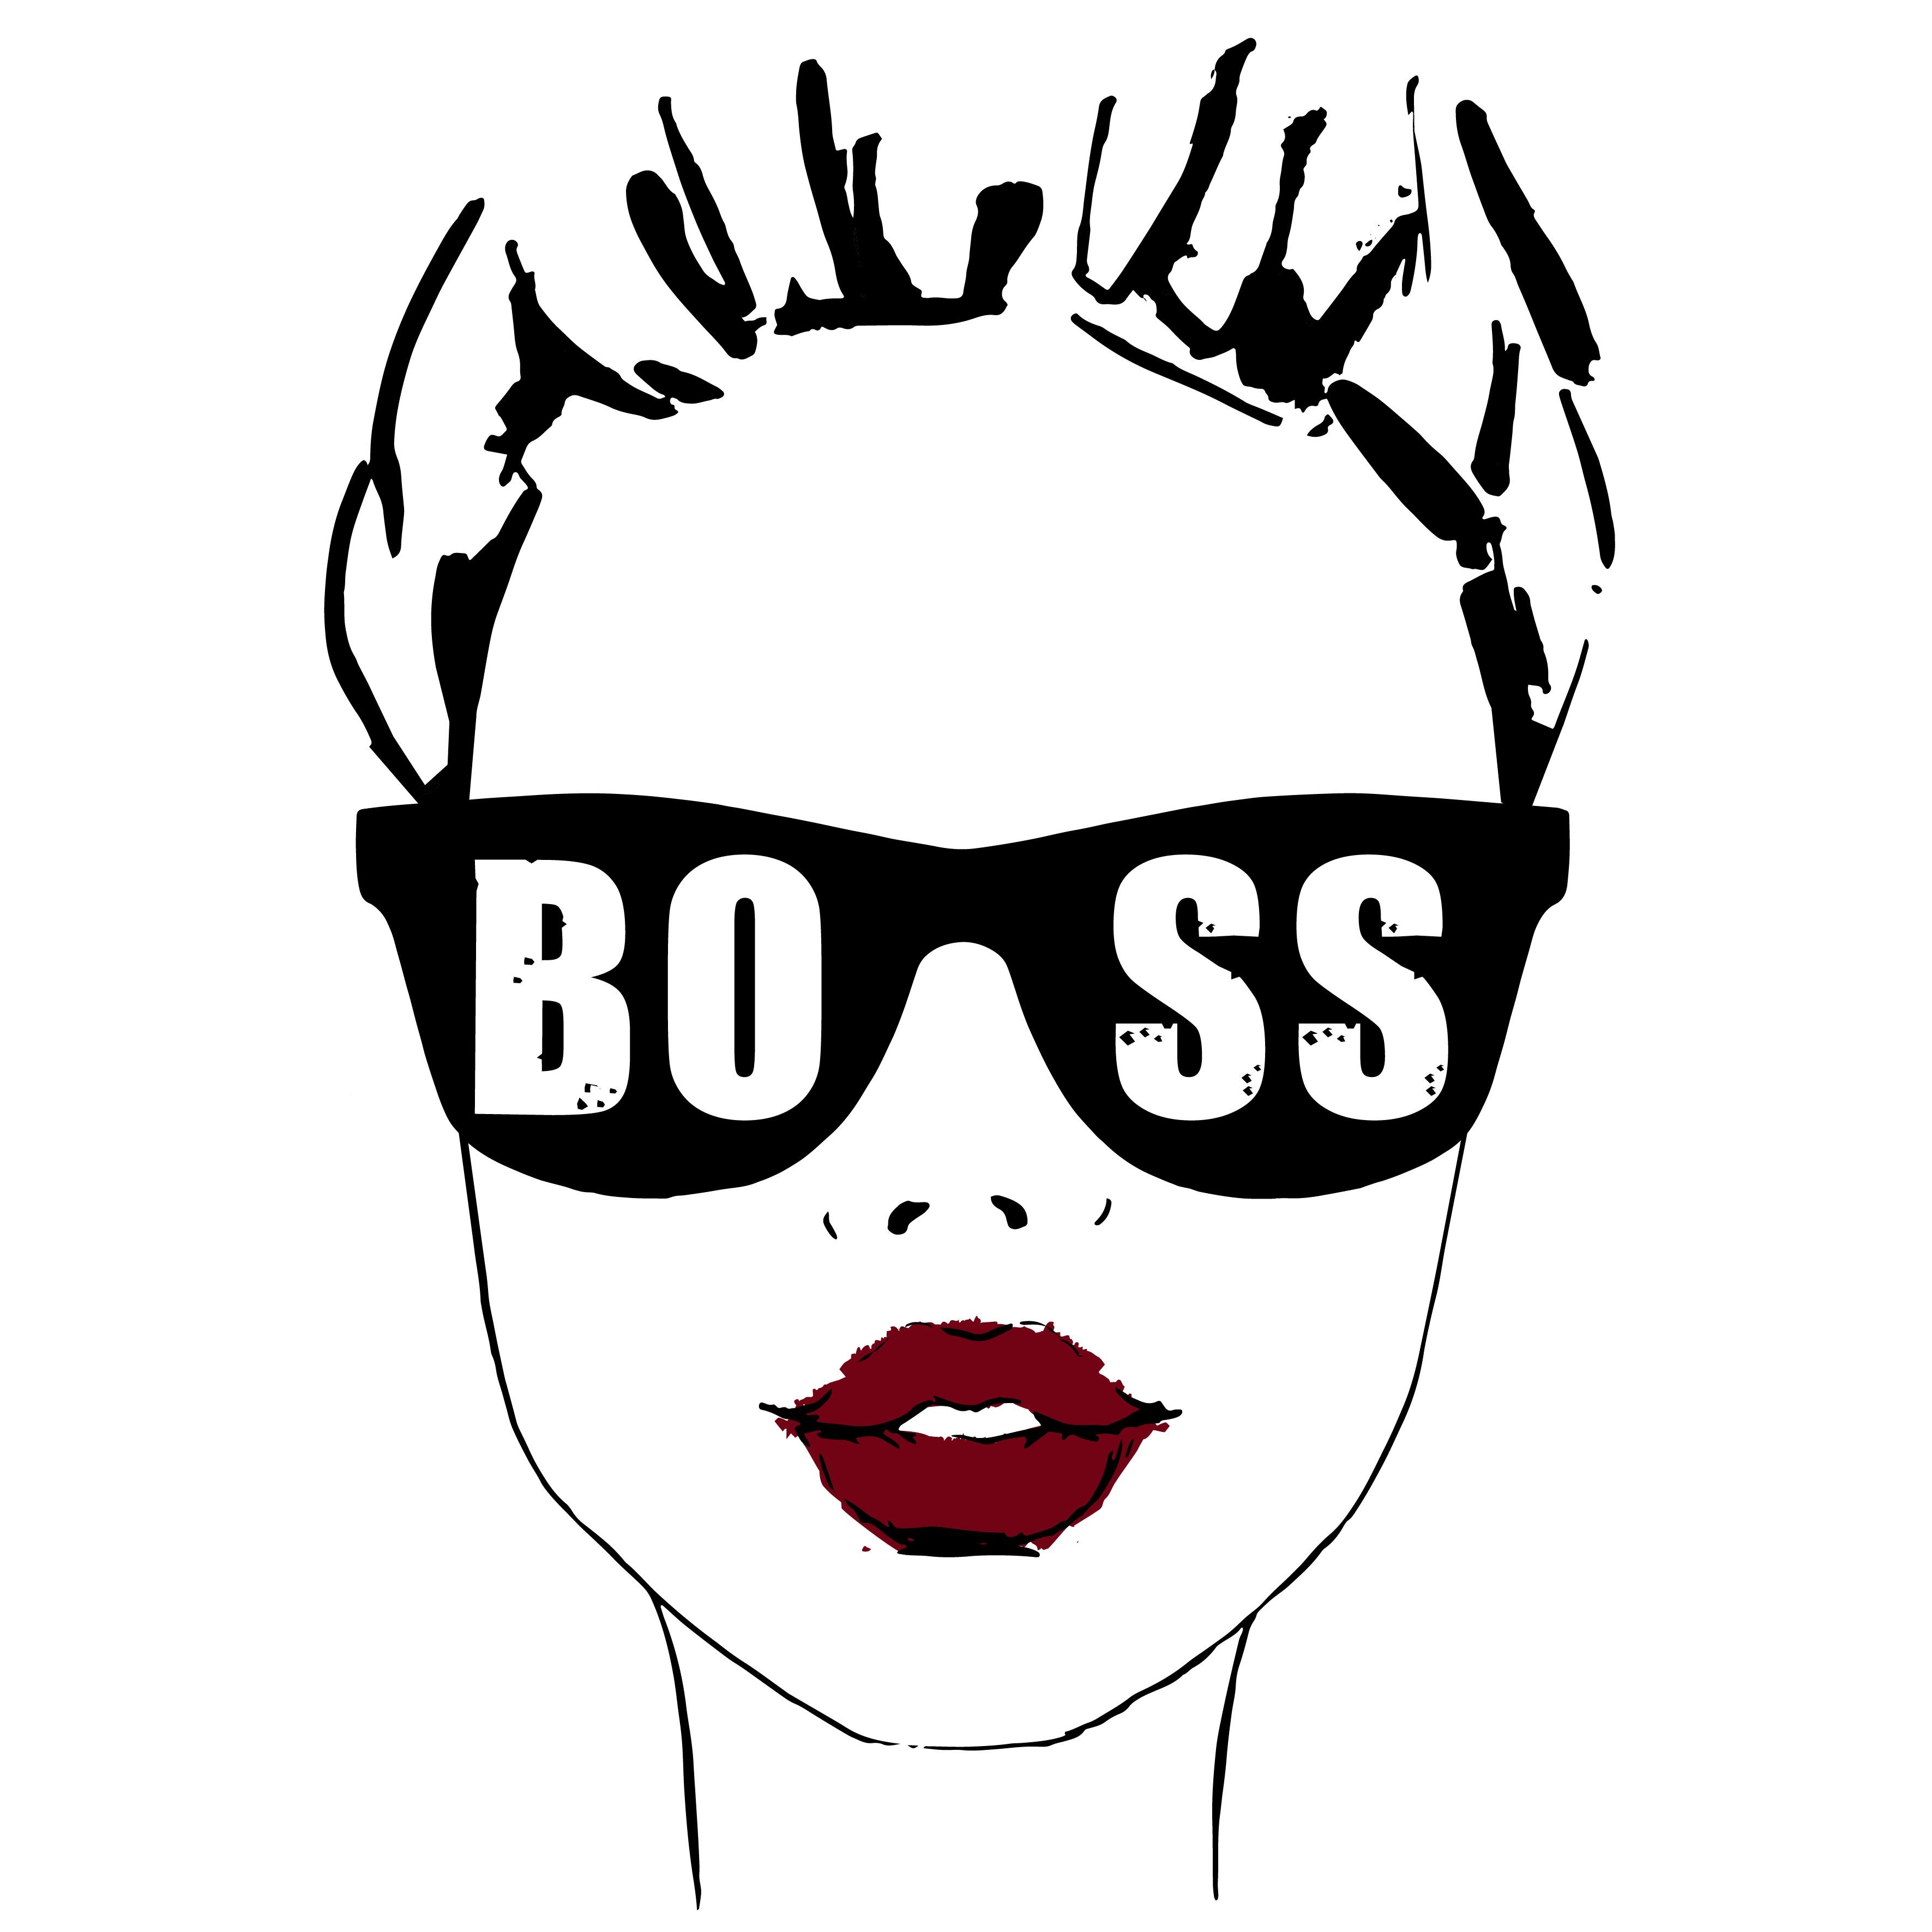 Lady boss is. Дерзкие надписи. Леди босс рисунок. Стикеры леди босс. Женщина вектор.